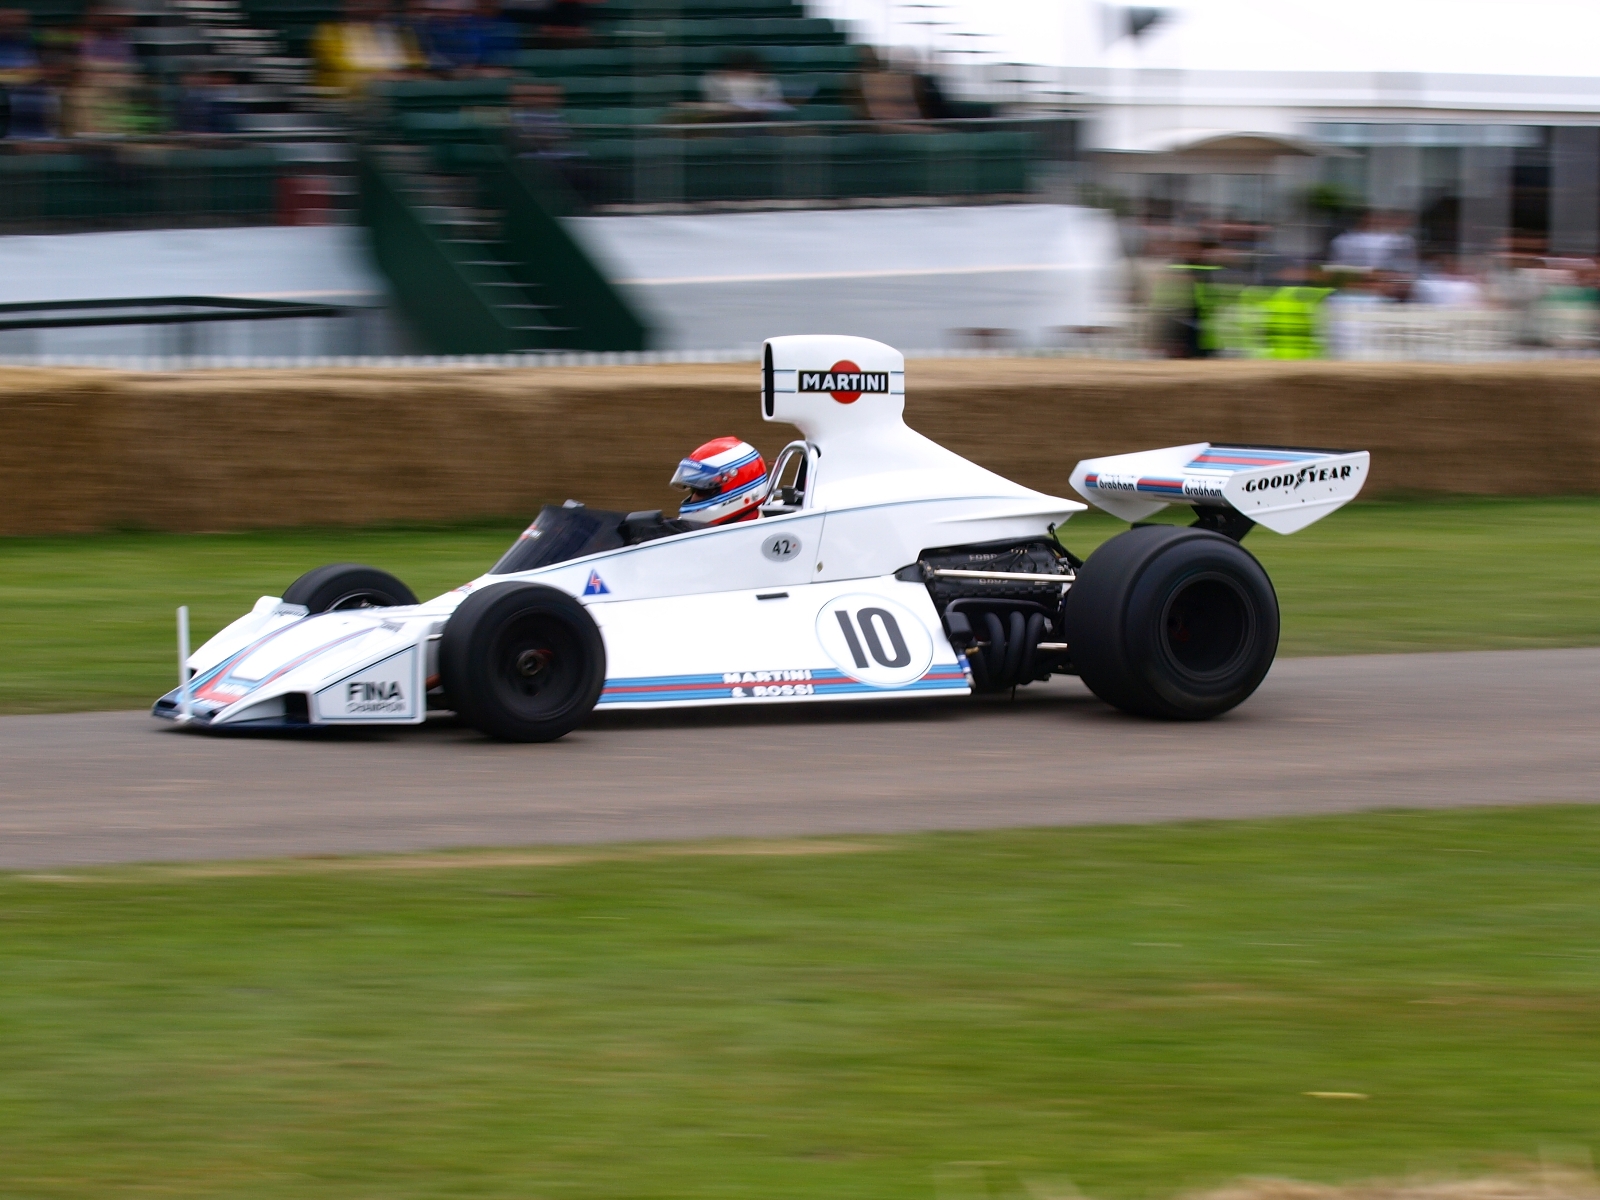 File:Brabham BT42 Goodwood 2008.jpg - Wikimedia Commons